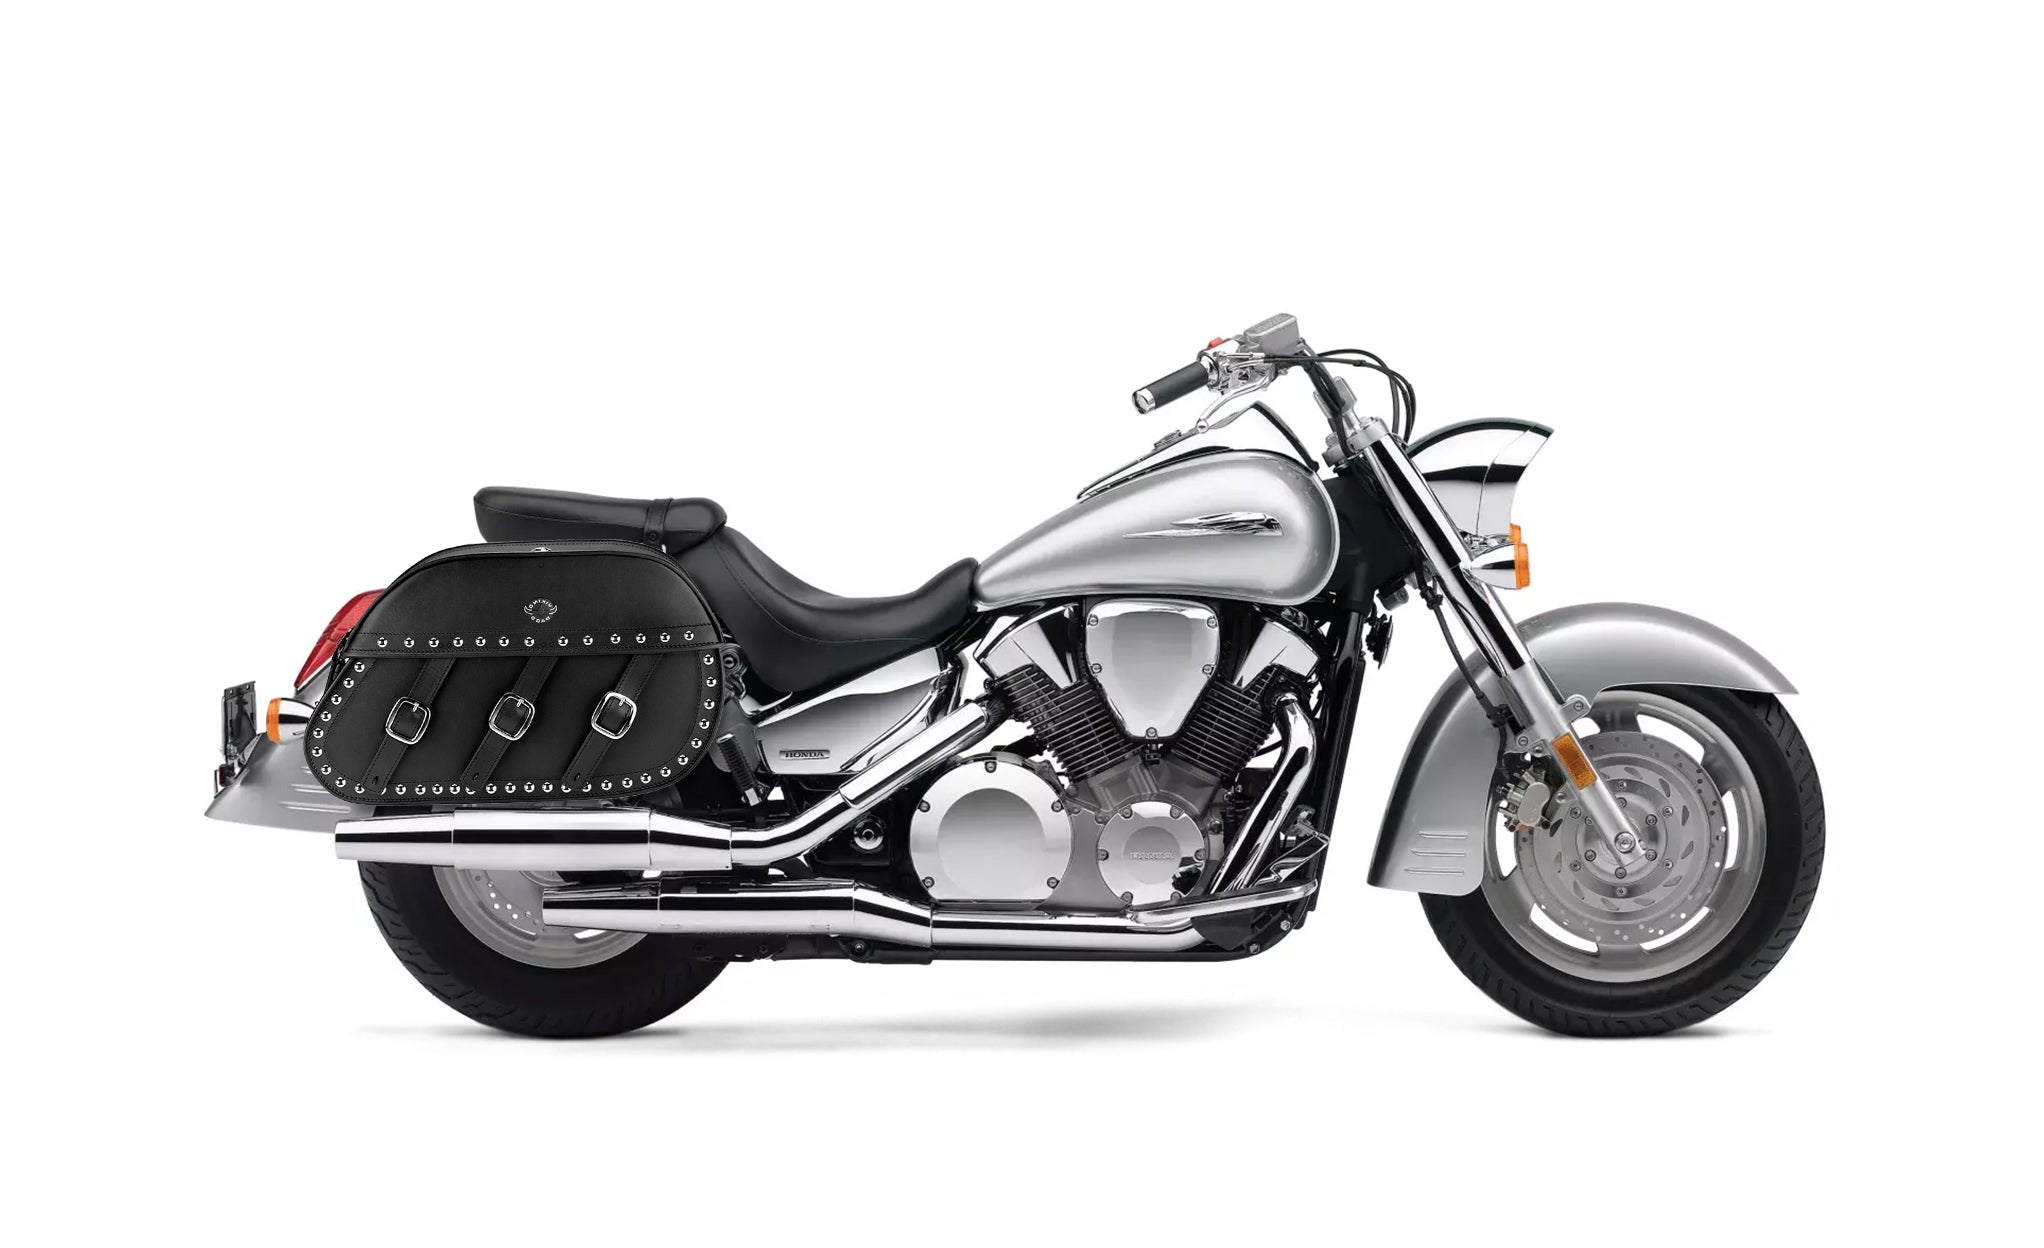 34L - Trianon Extra Large Honda VTX 1300 S Studded Leather Motorcycle Saddlebags on Bike Photo @expand